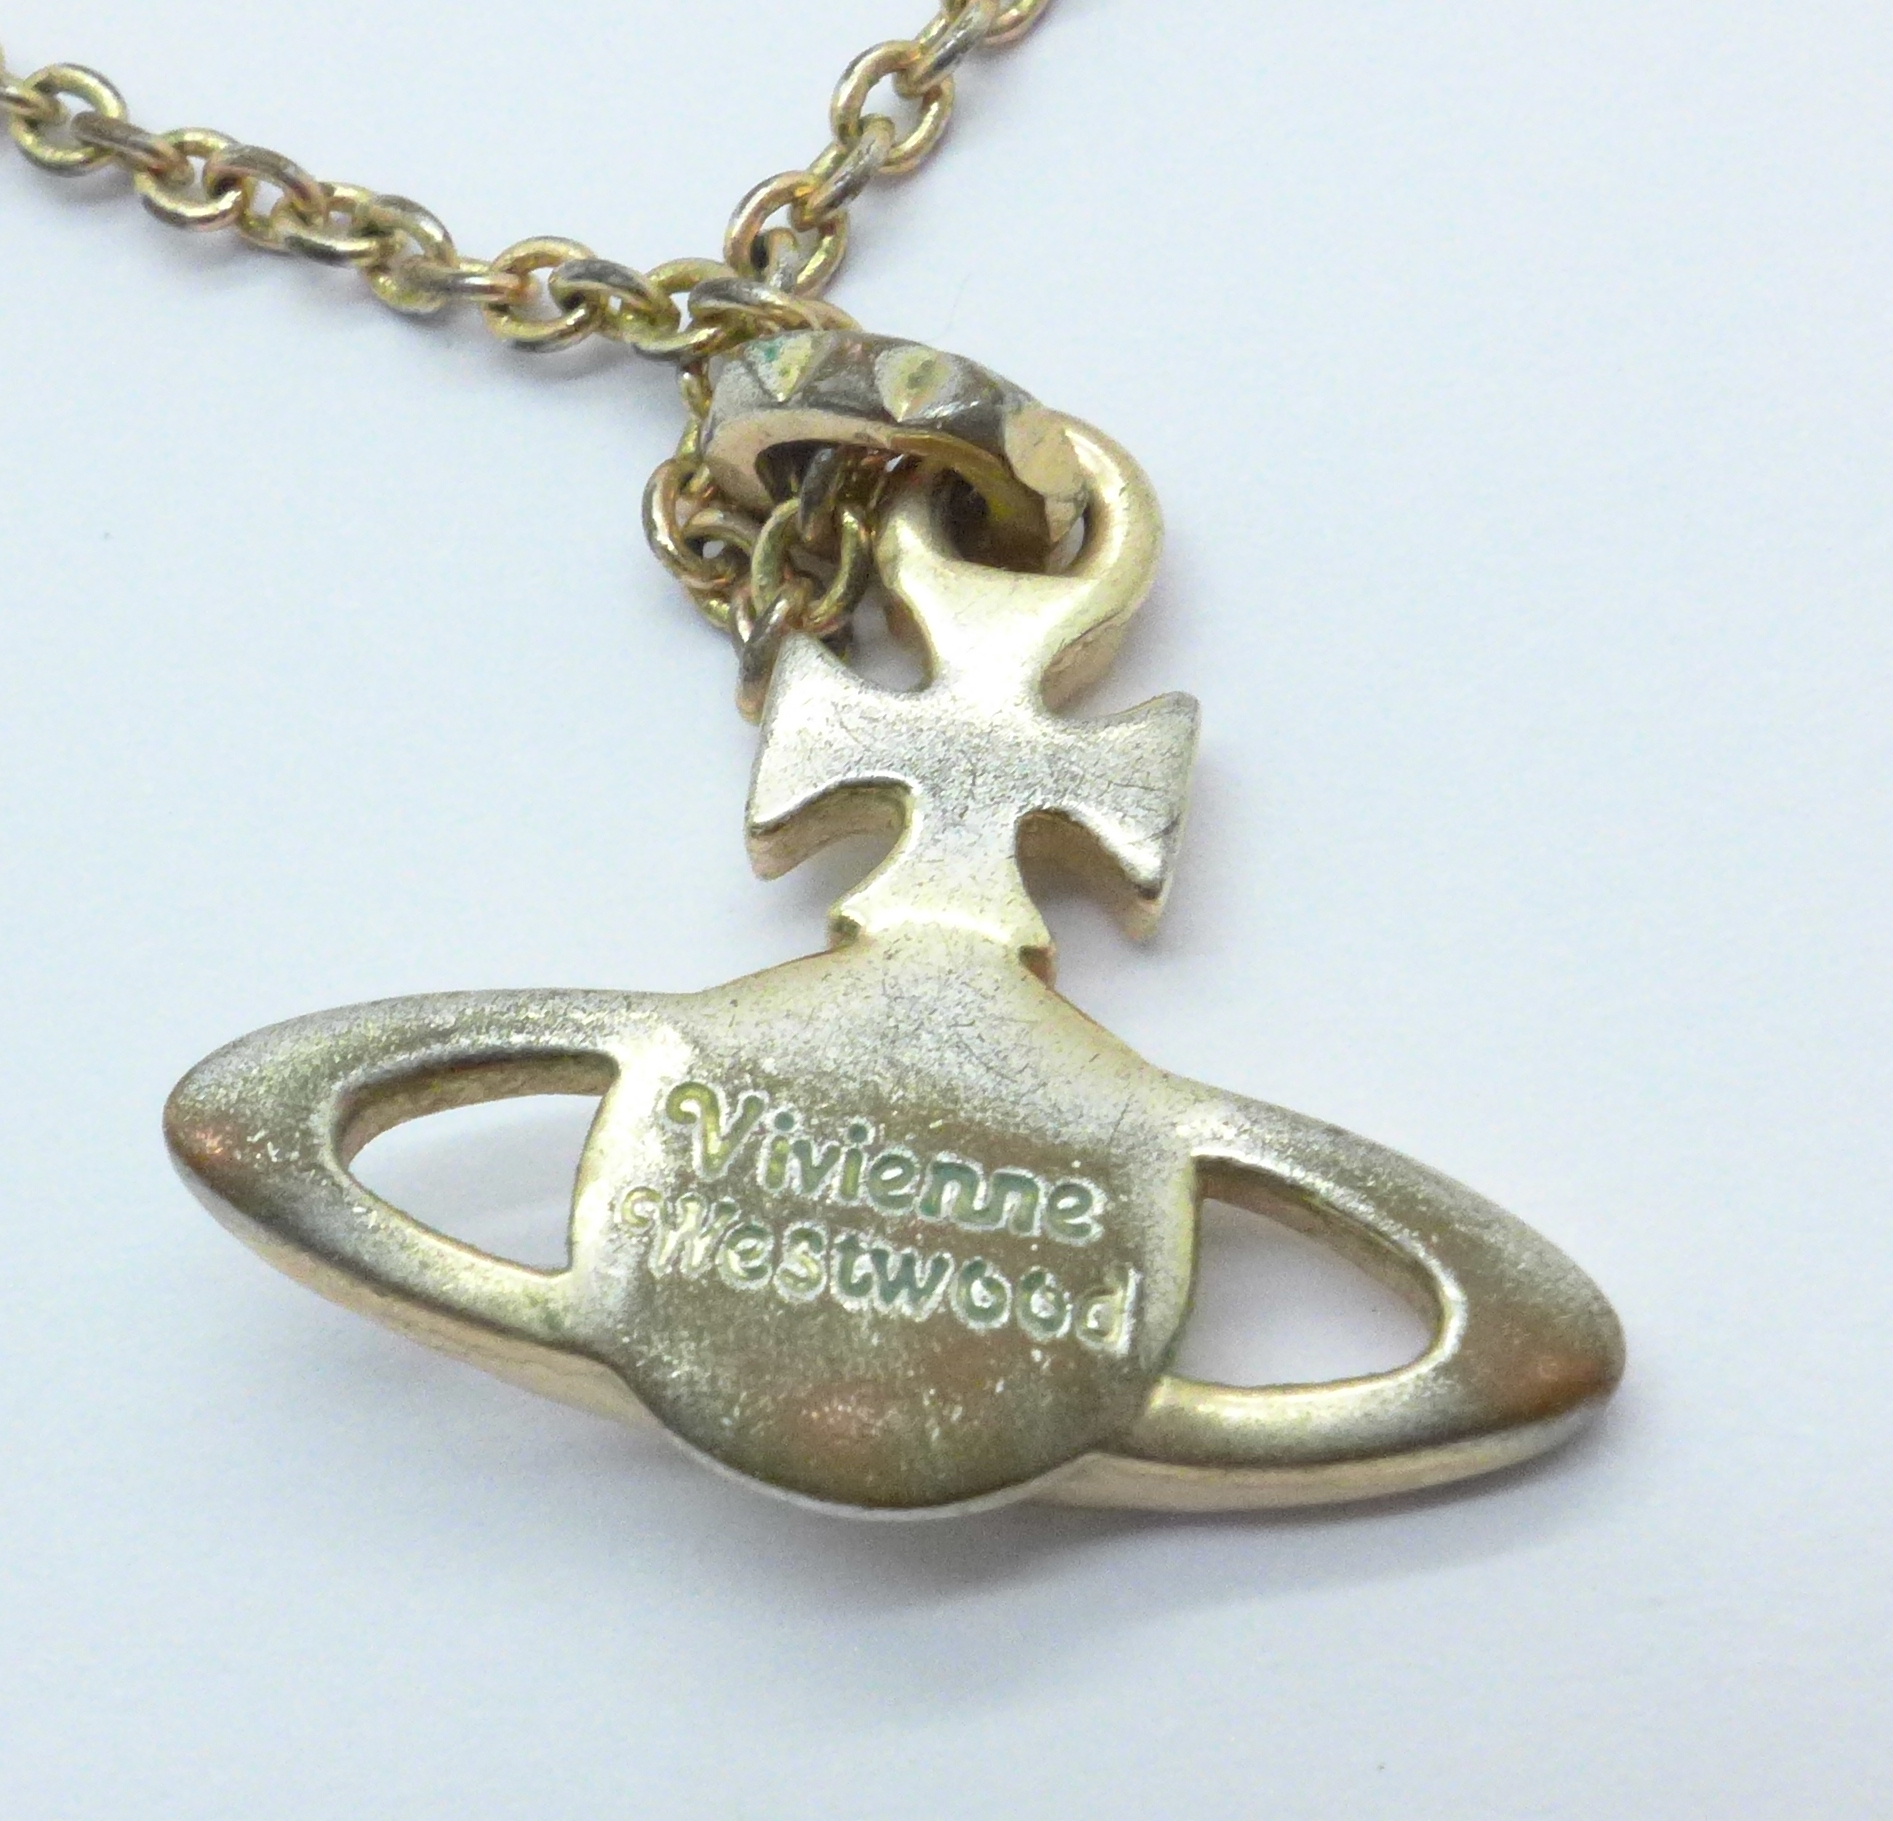 A Vivienne Westwood necklace, (pendant worn) - Image 3 of 4